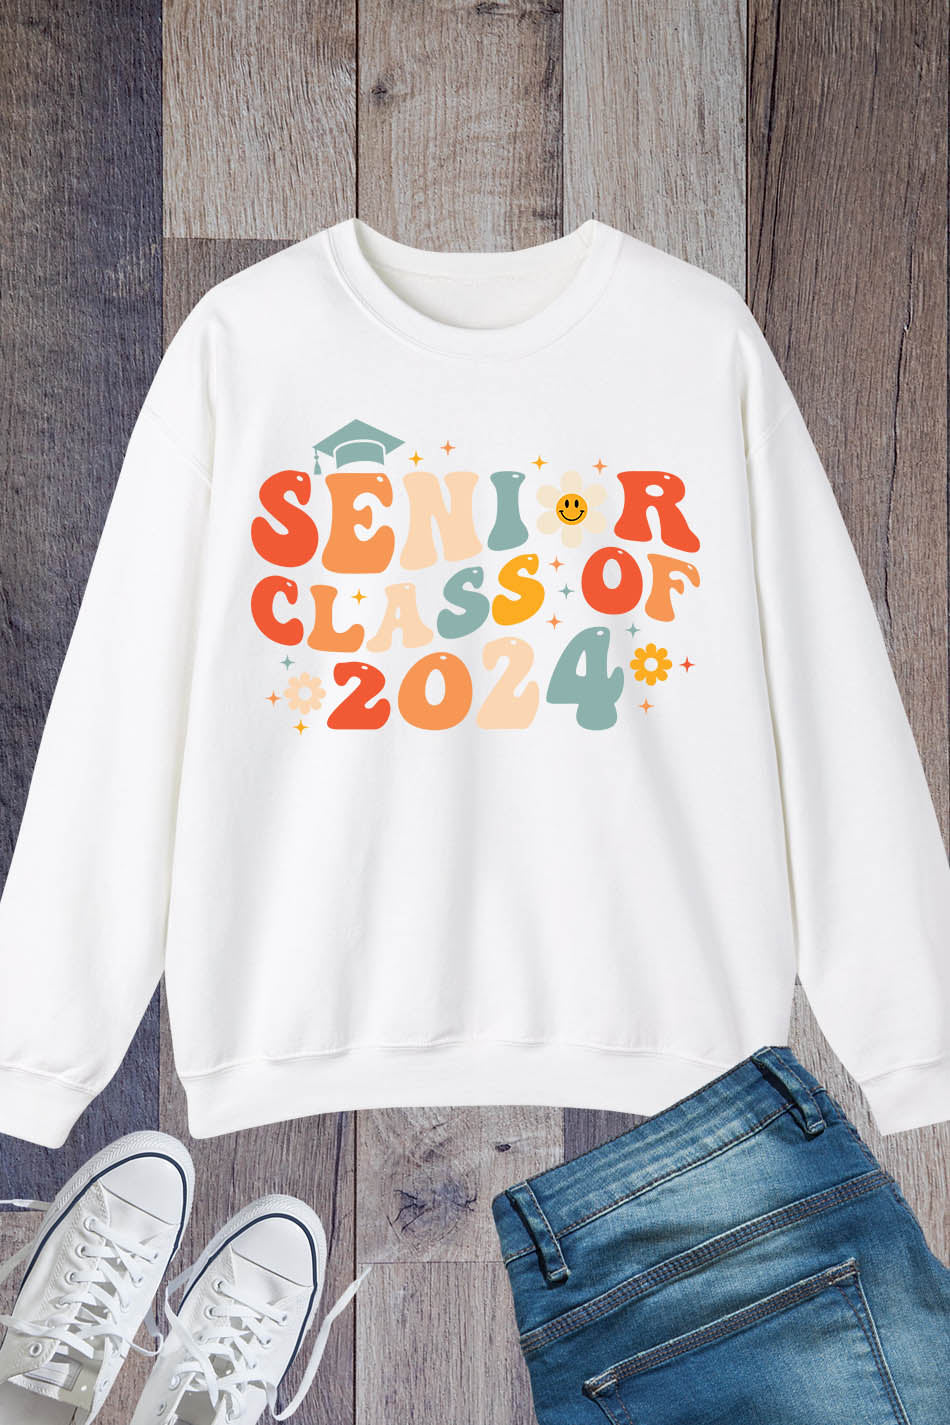 Senior Class of 2024 Graduation Sweatshirt